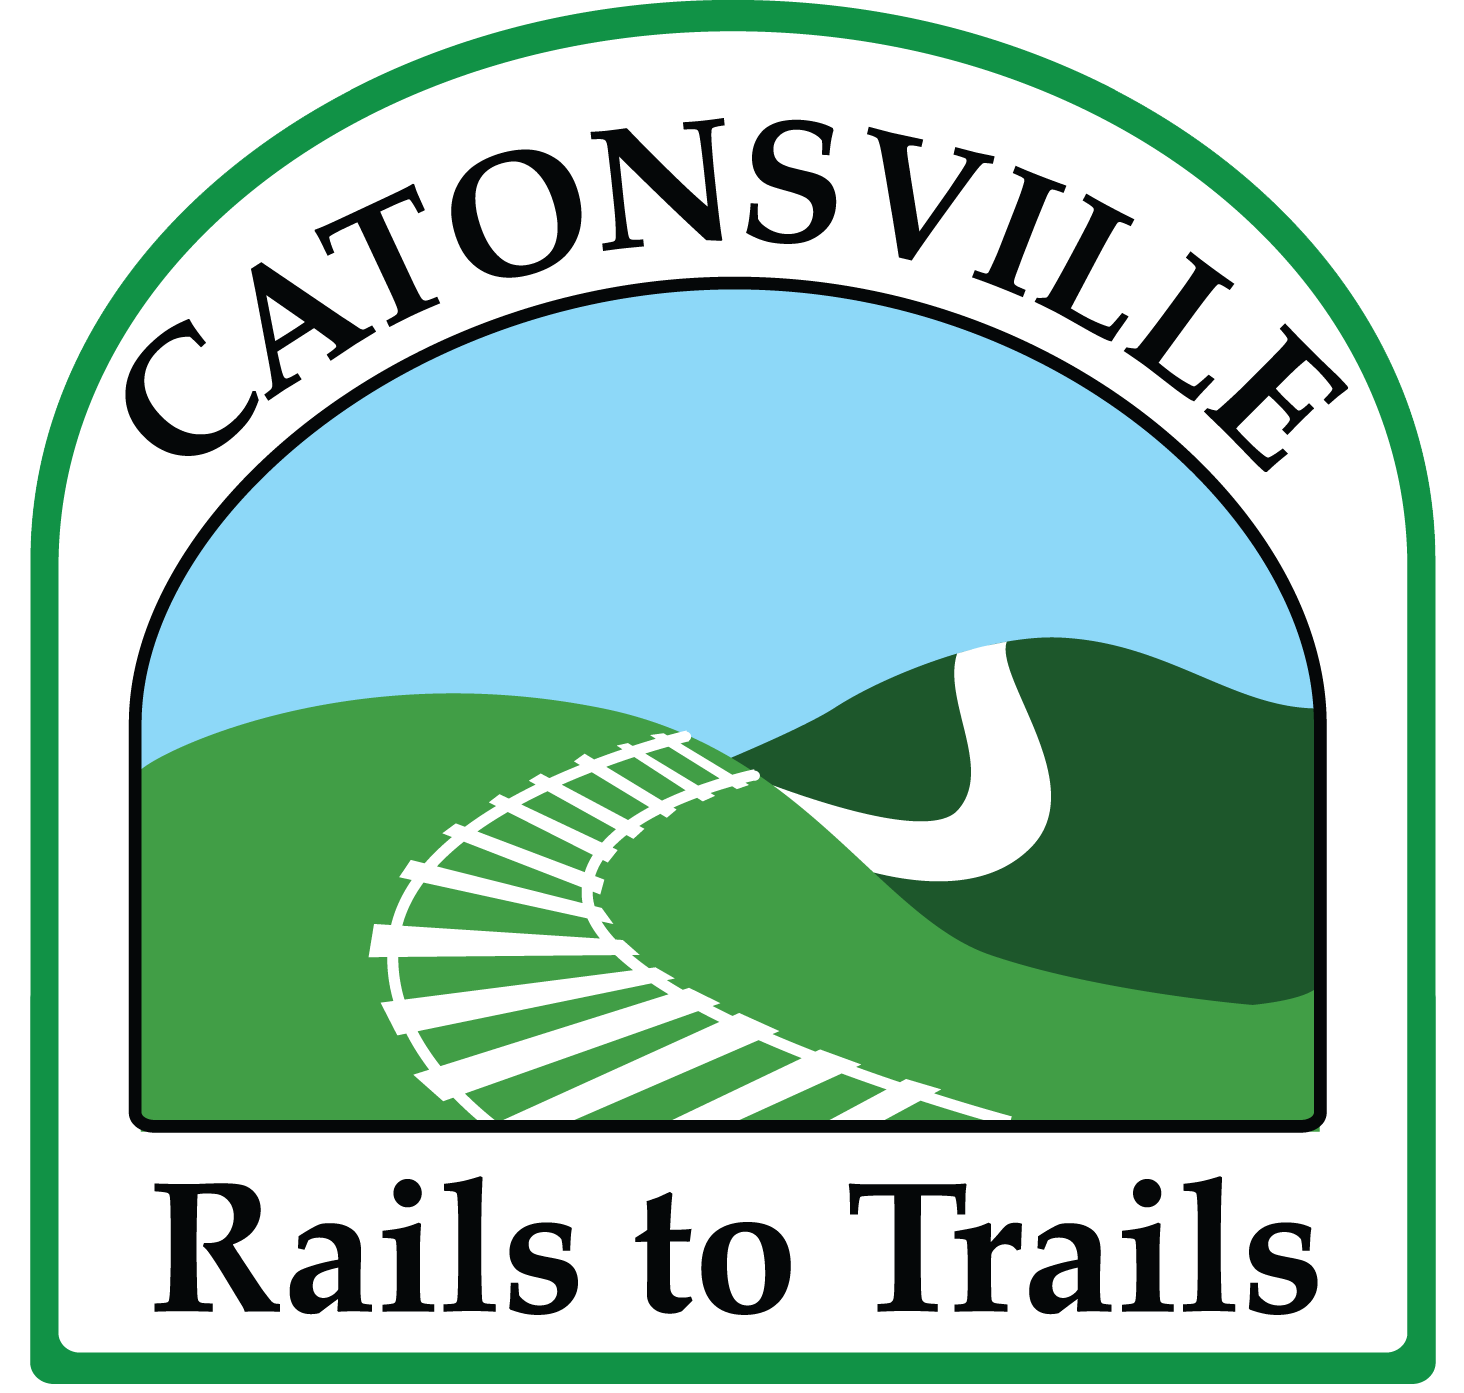 Catonsville Short Line Railroad Trail